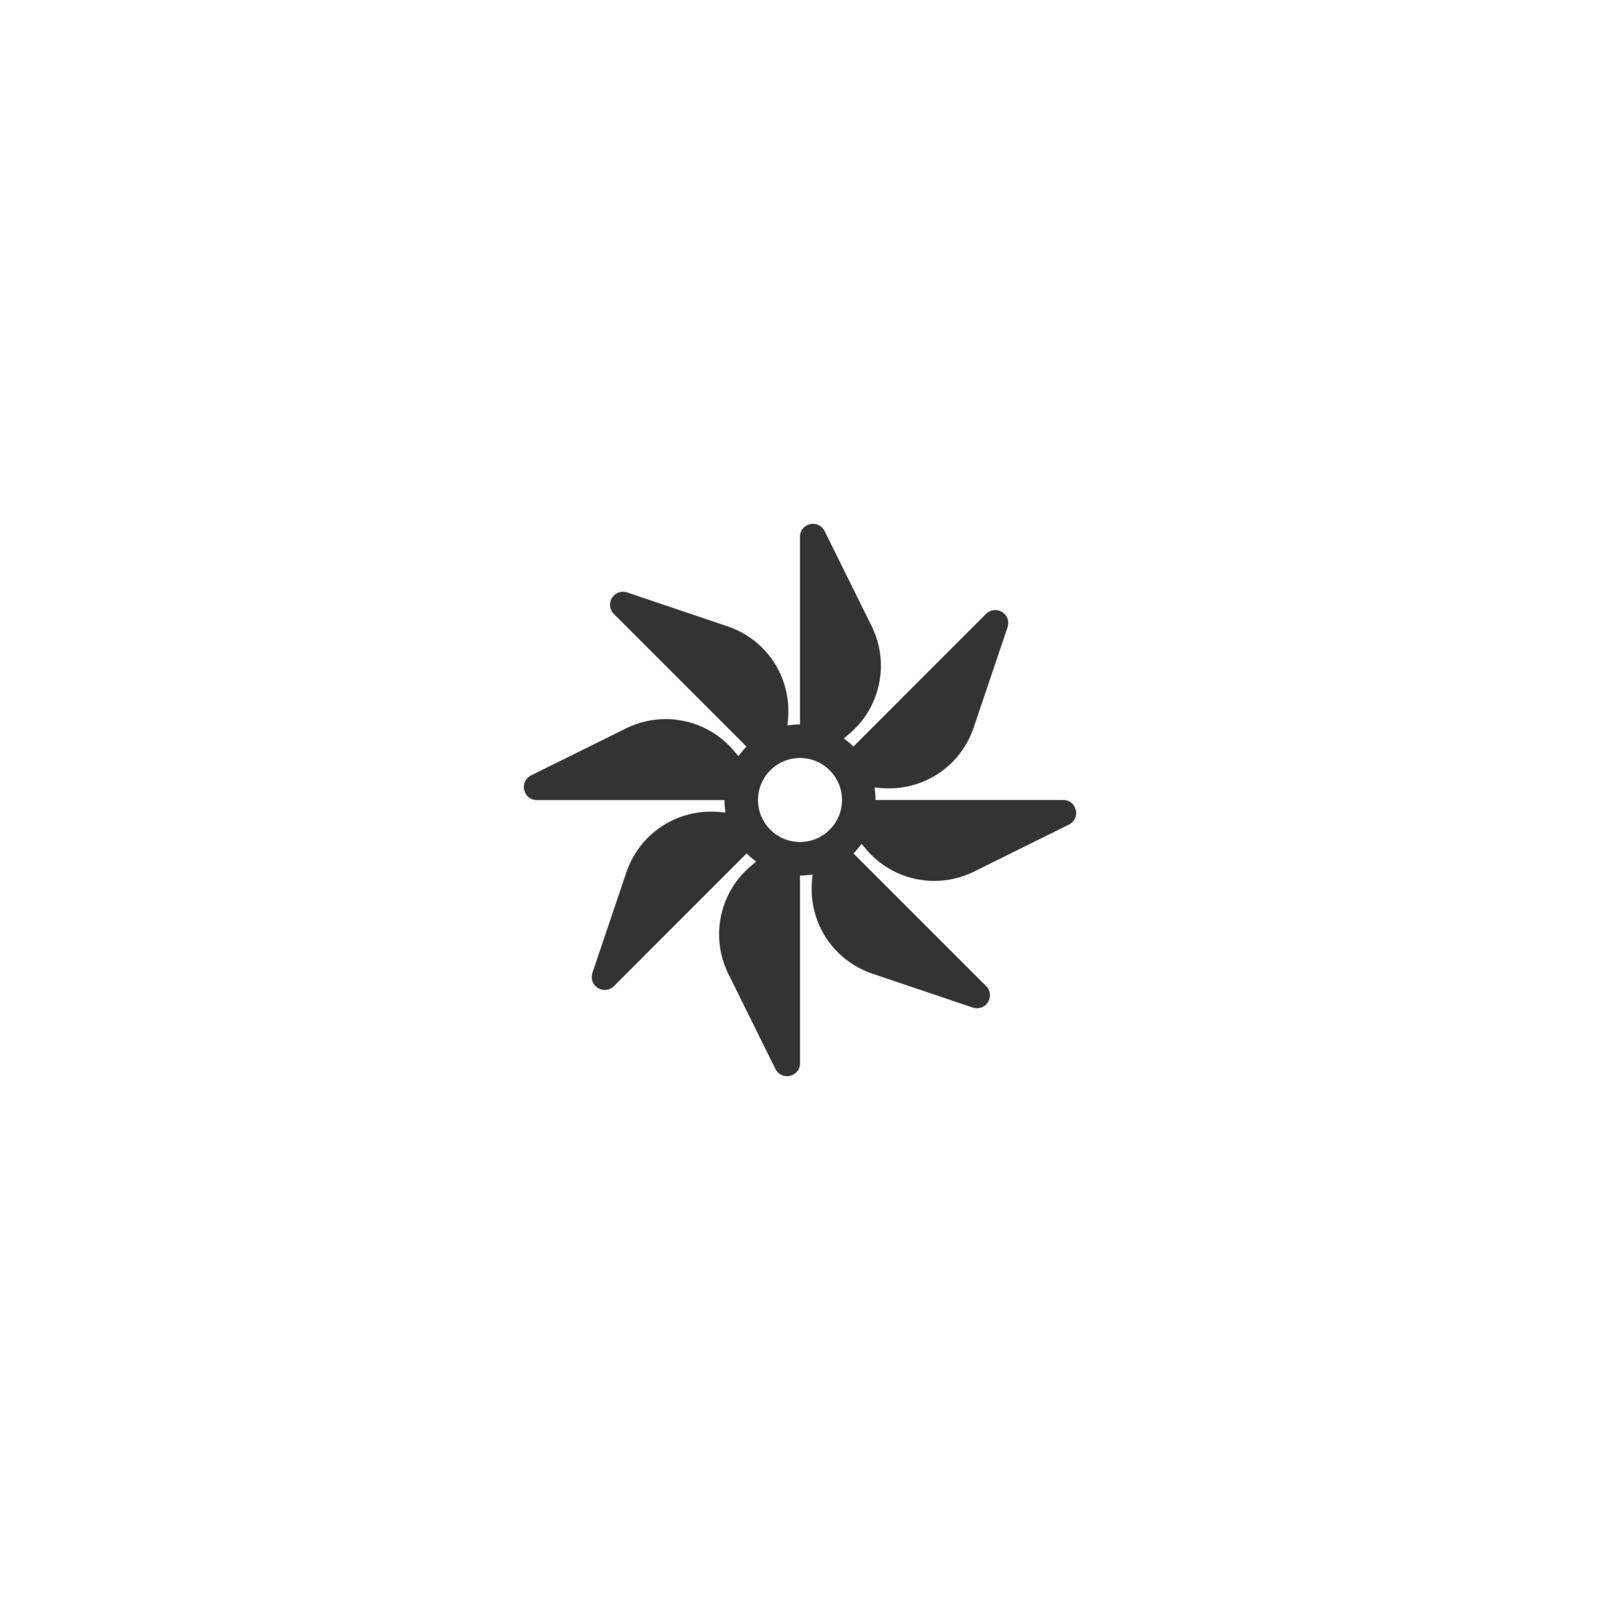 Fan icon logo flat design template by bellaxbudhong3